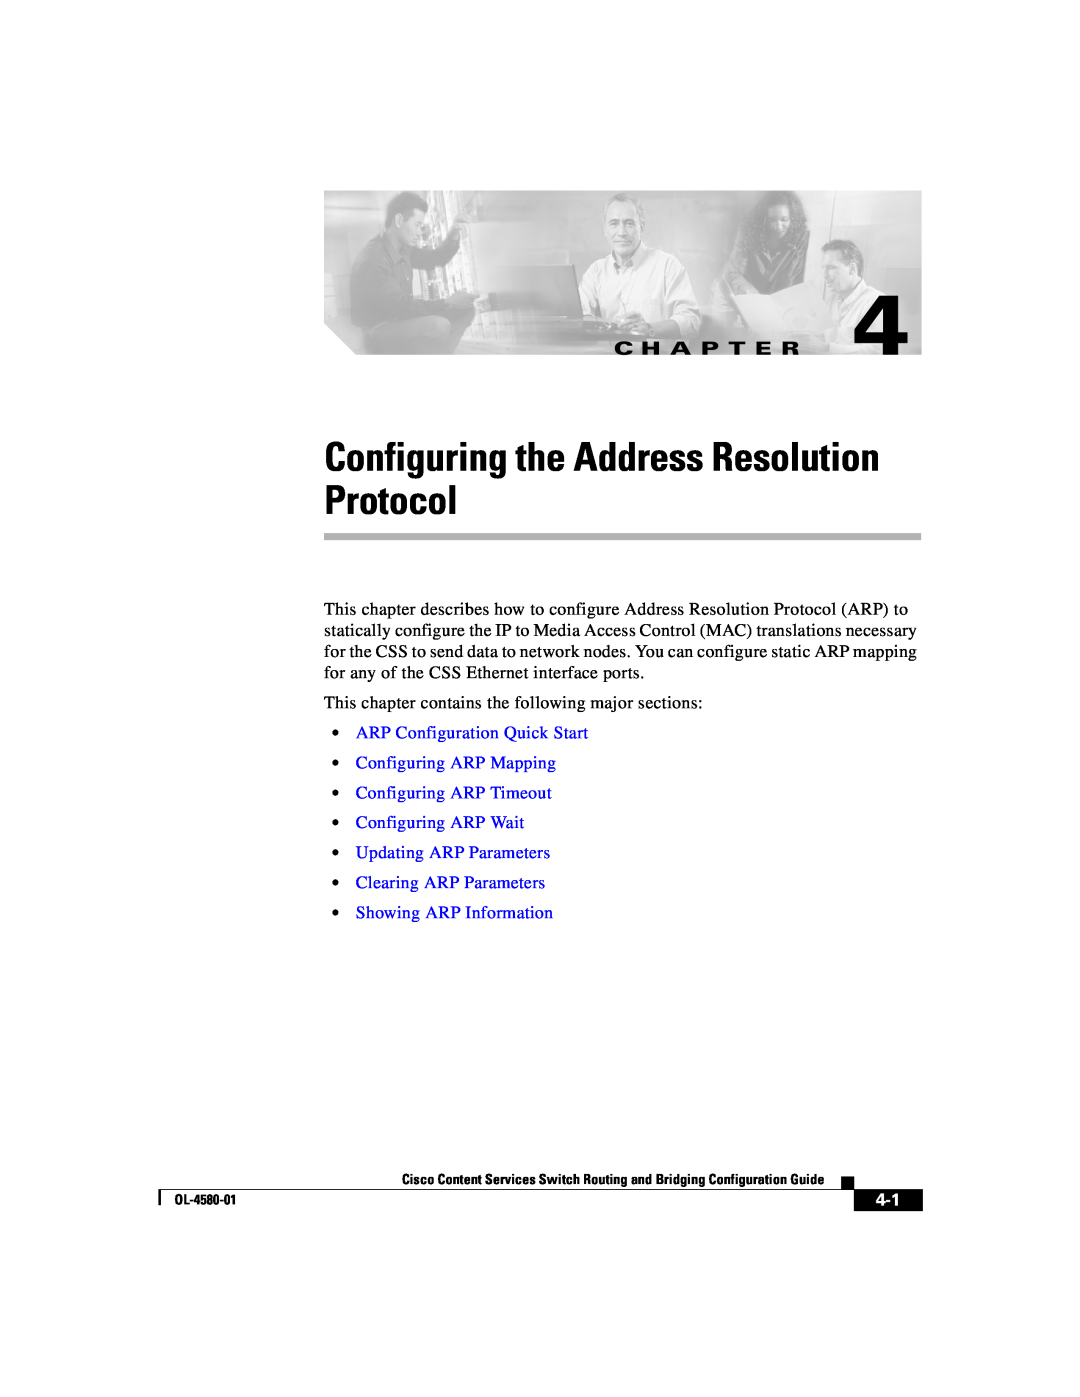 Cisco Systems OL-4580-01 manual Protocol, Configuring the Address Resolution, C H A P T E R 